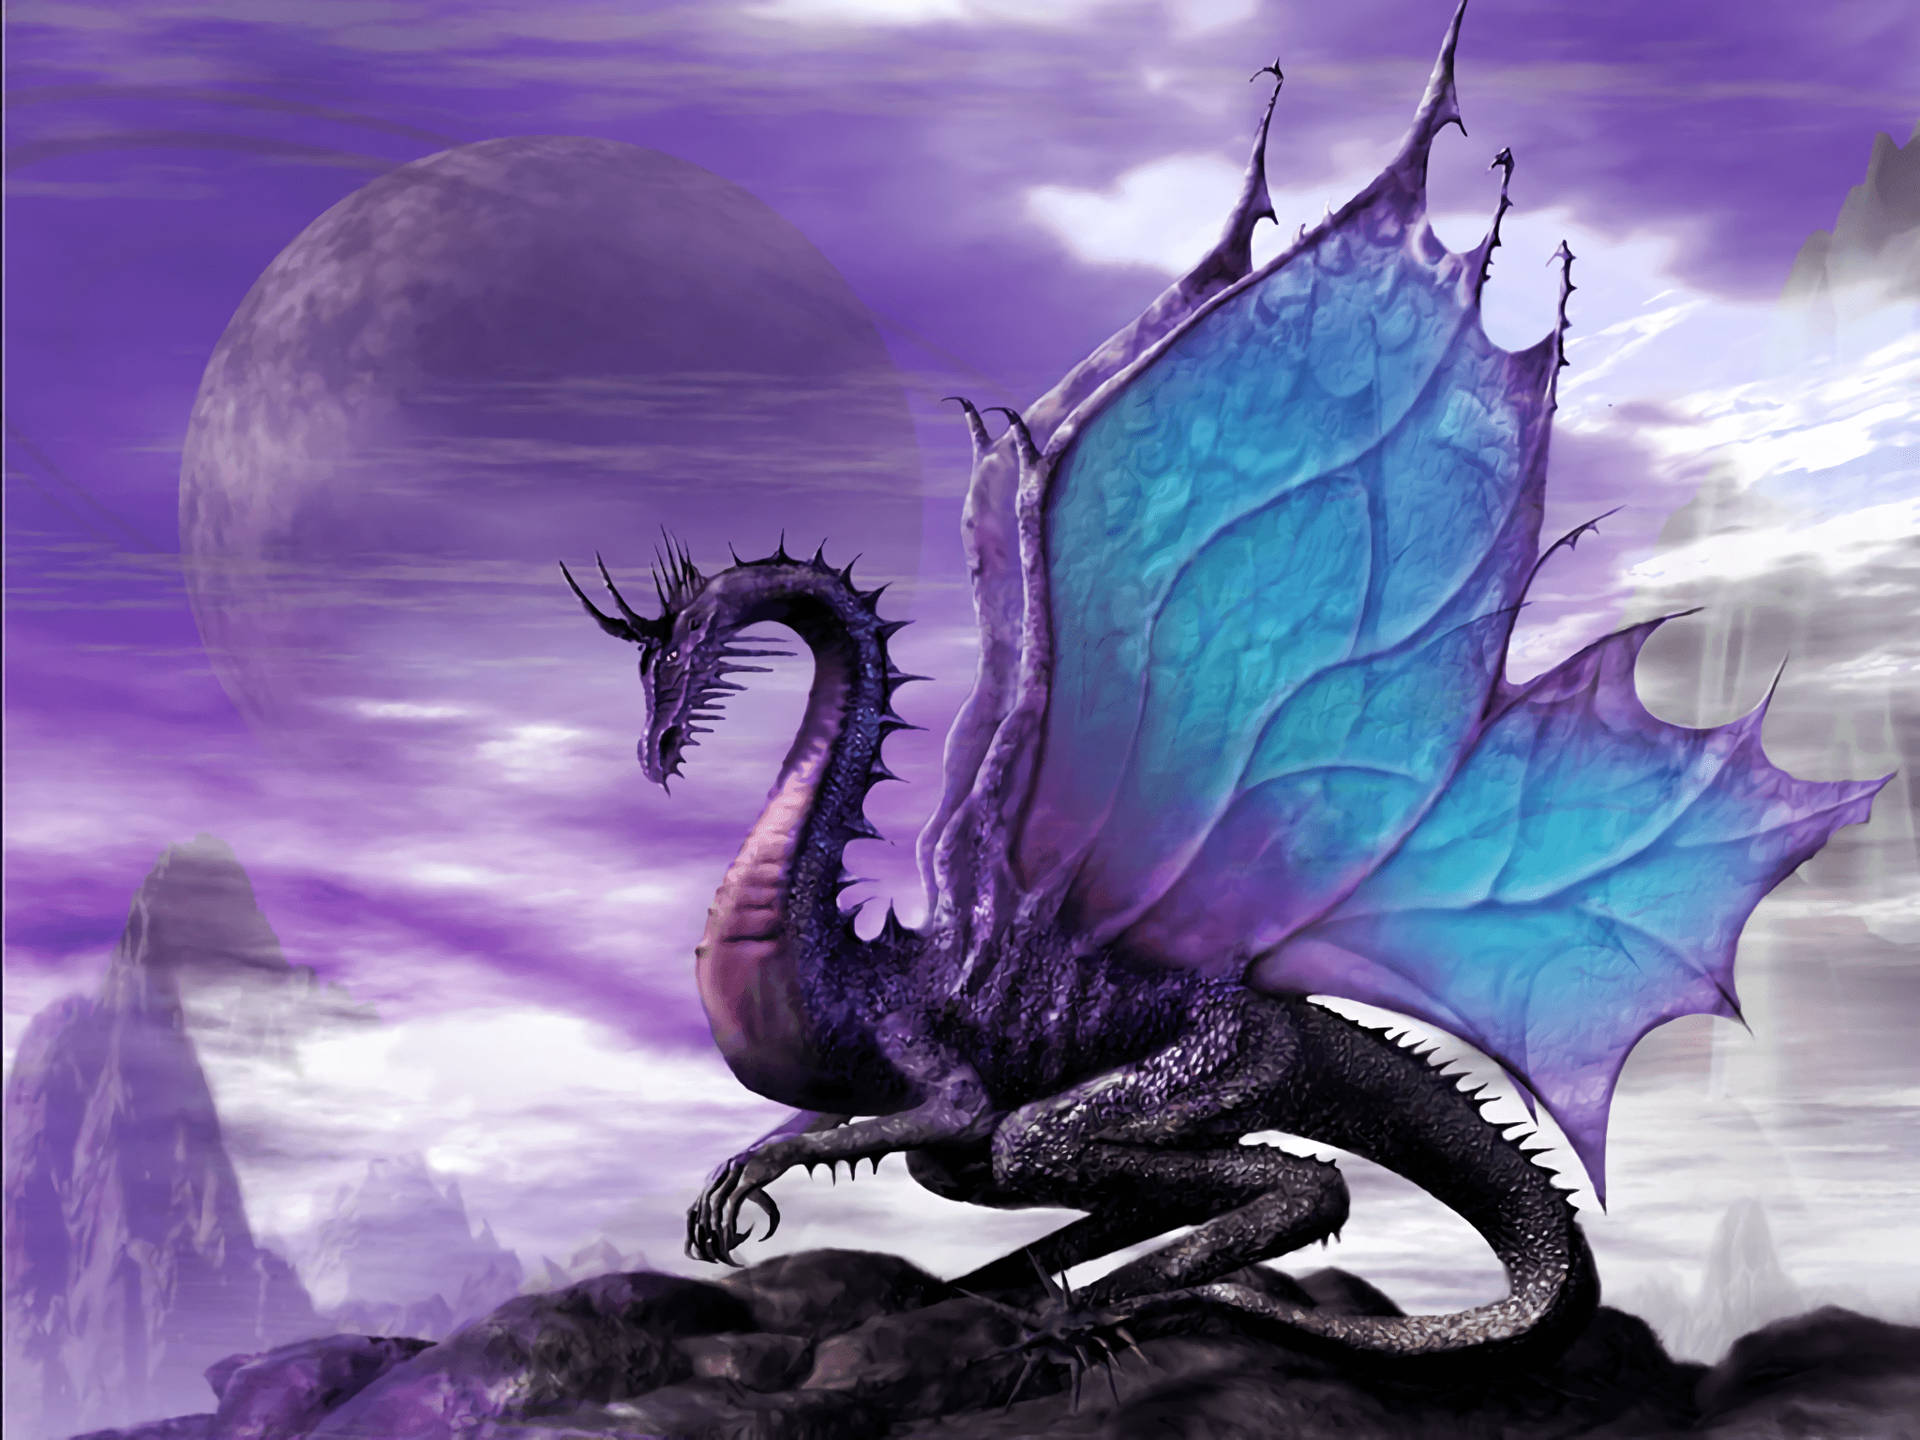 Free Dragon Wallpaper Downloads, [600+] Dragon Wallpapers for FREE |  